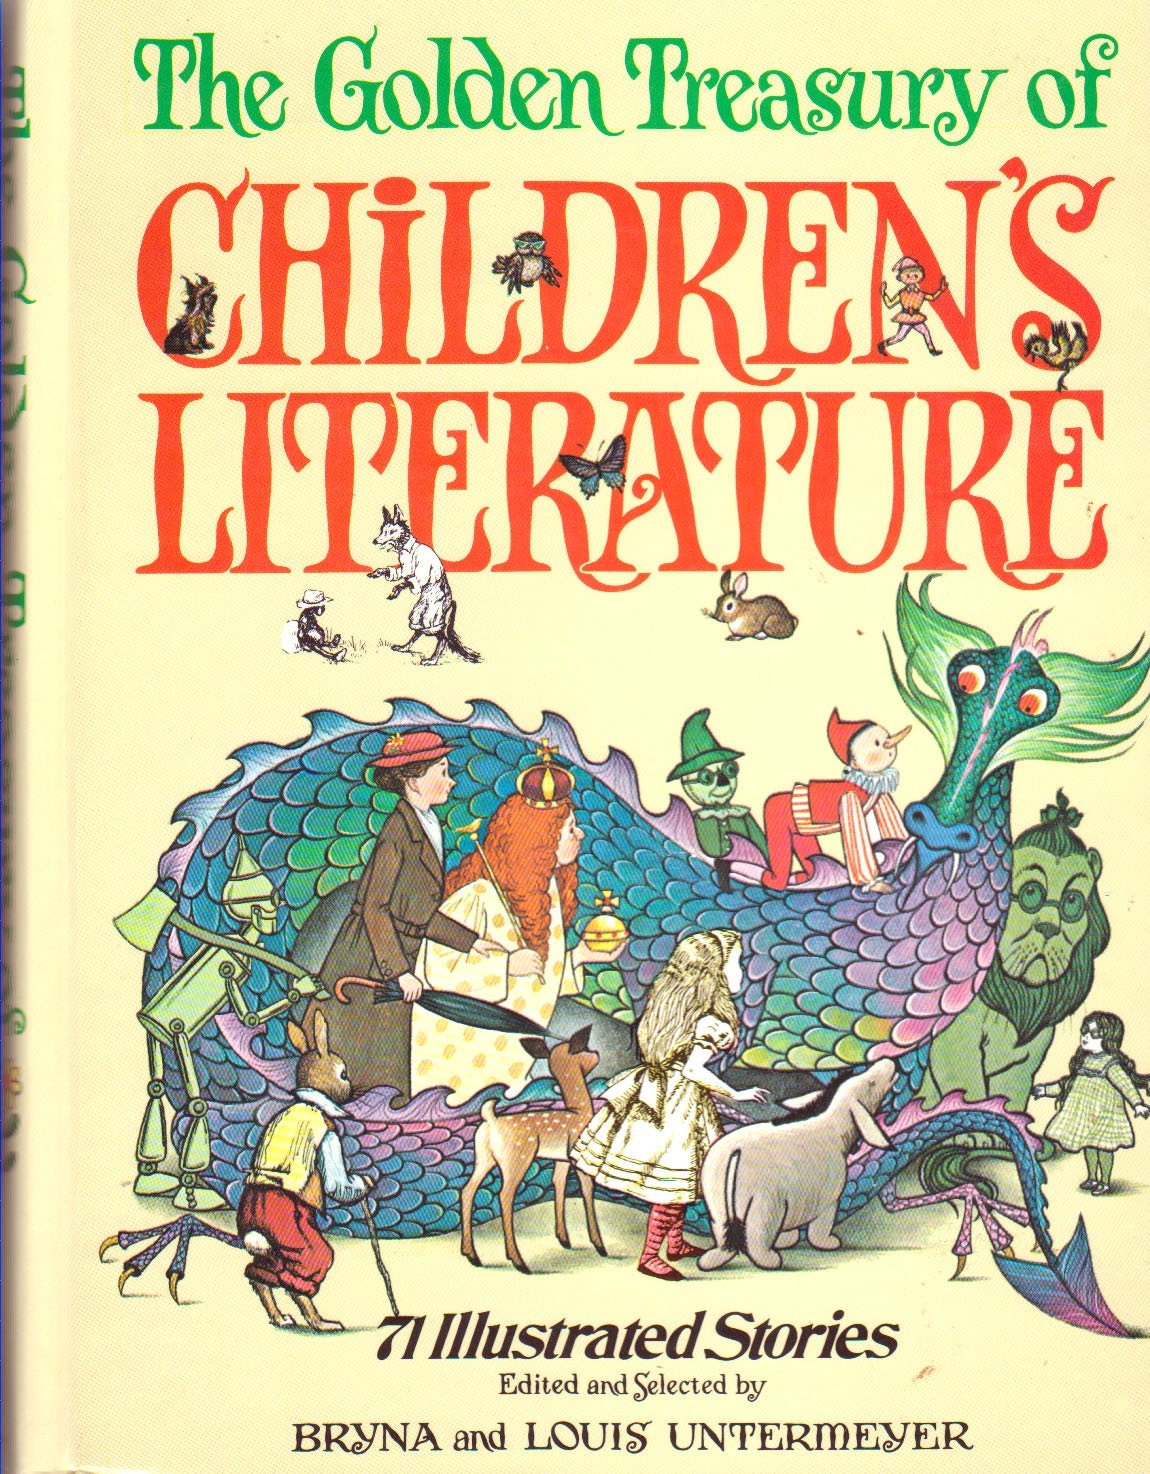 The Golden Treasury of Children's Literature